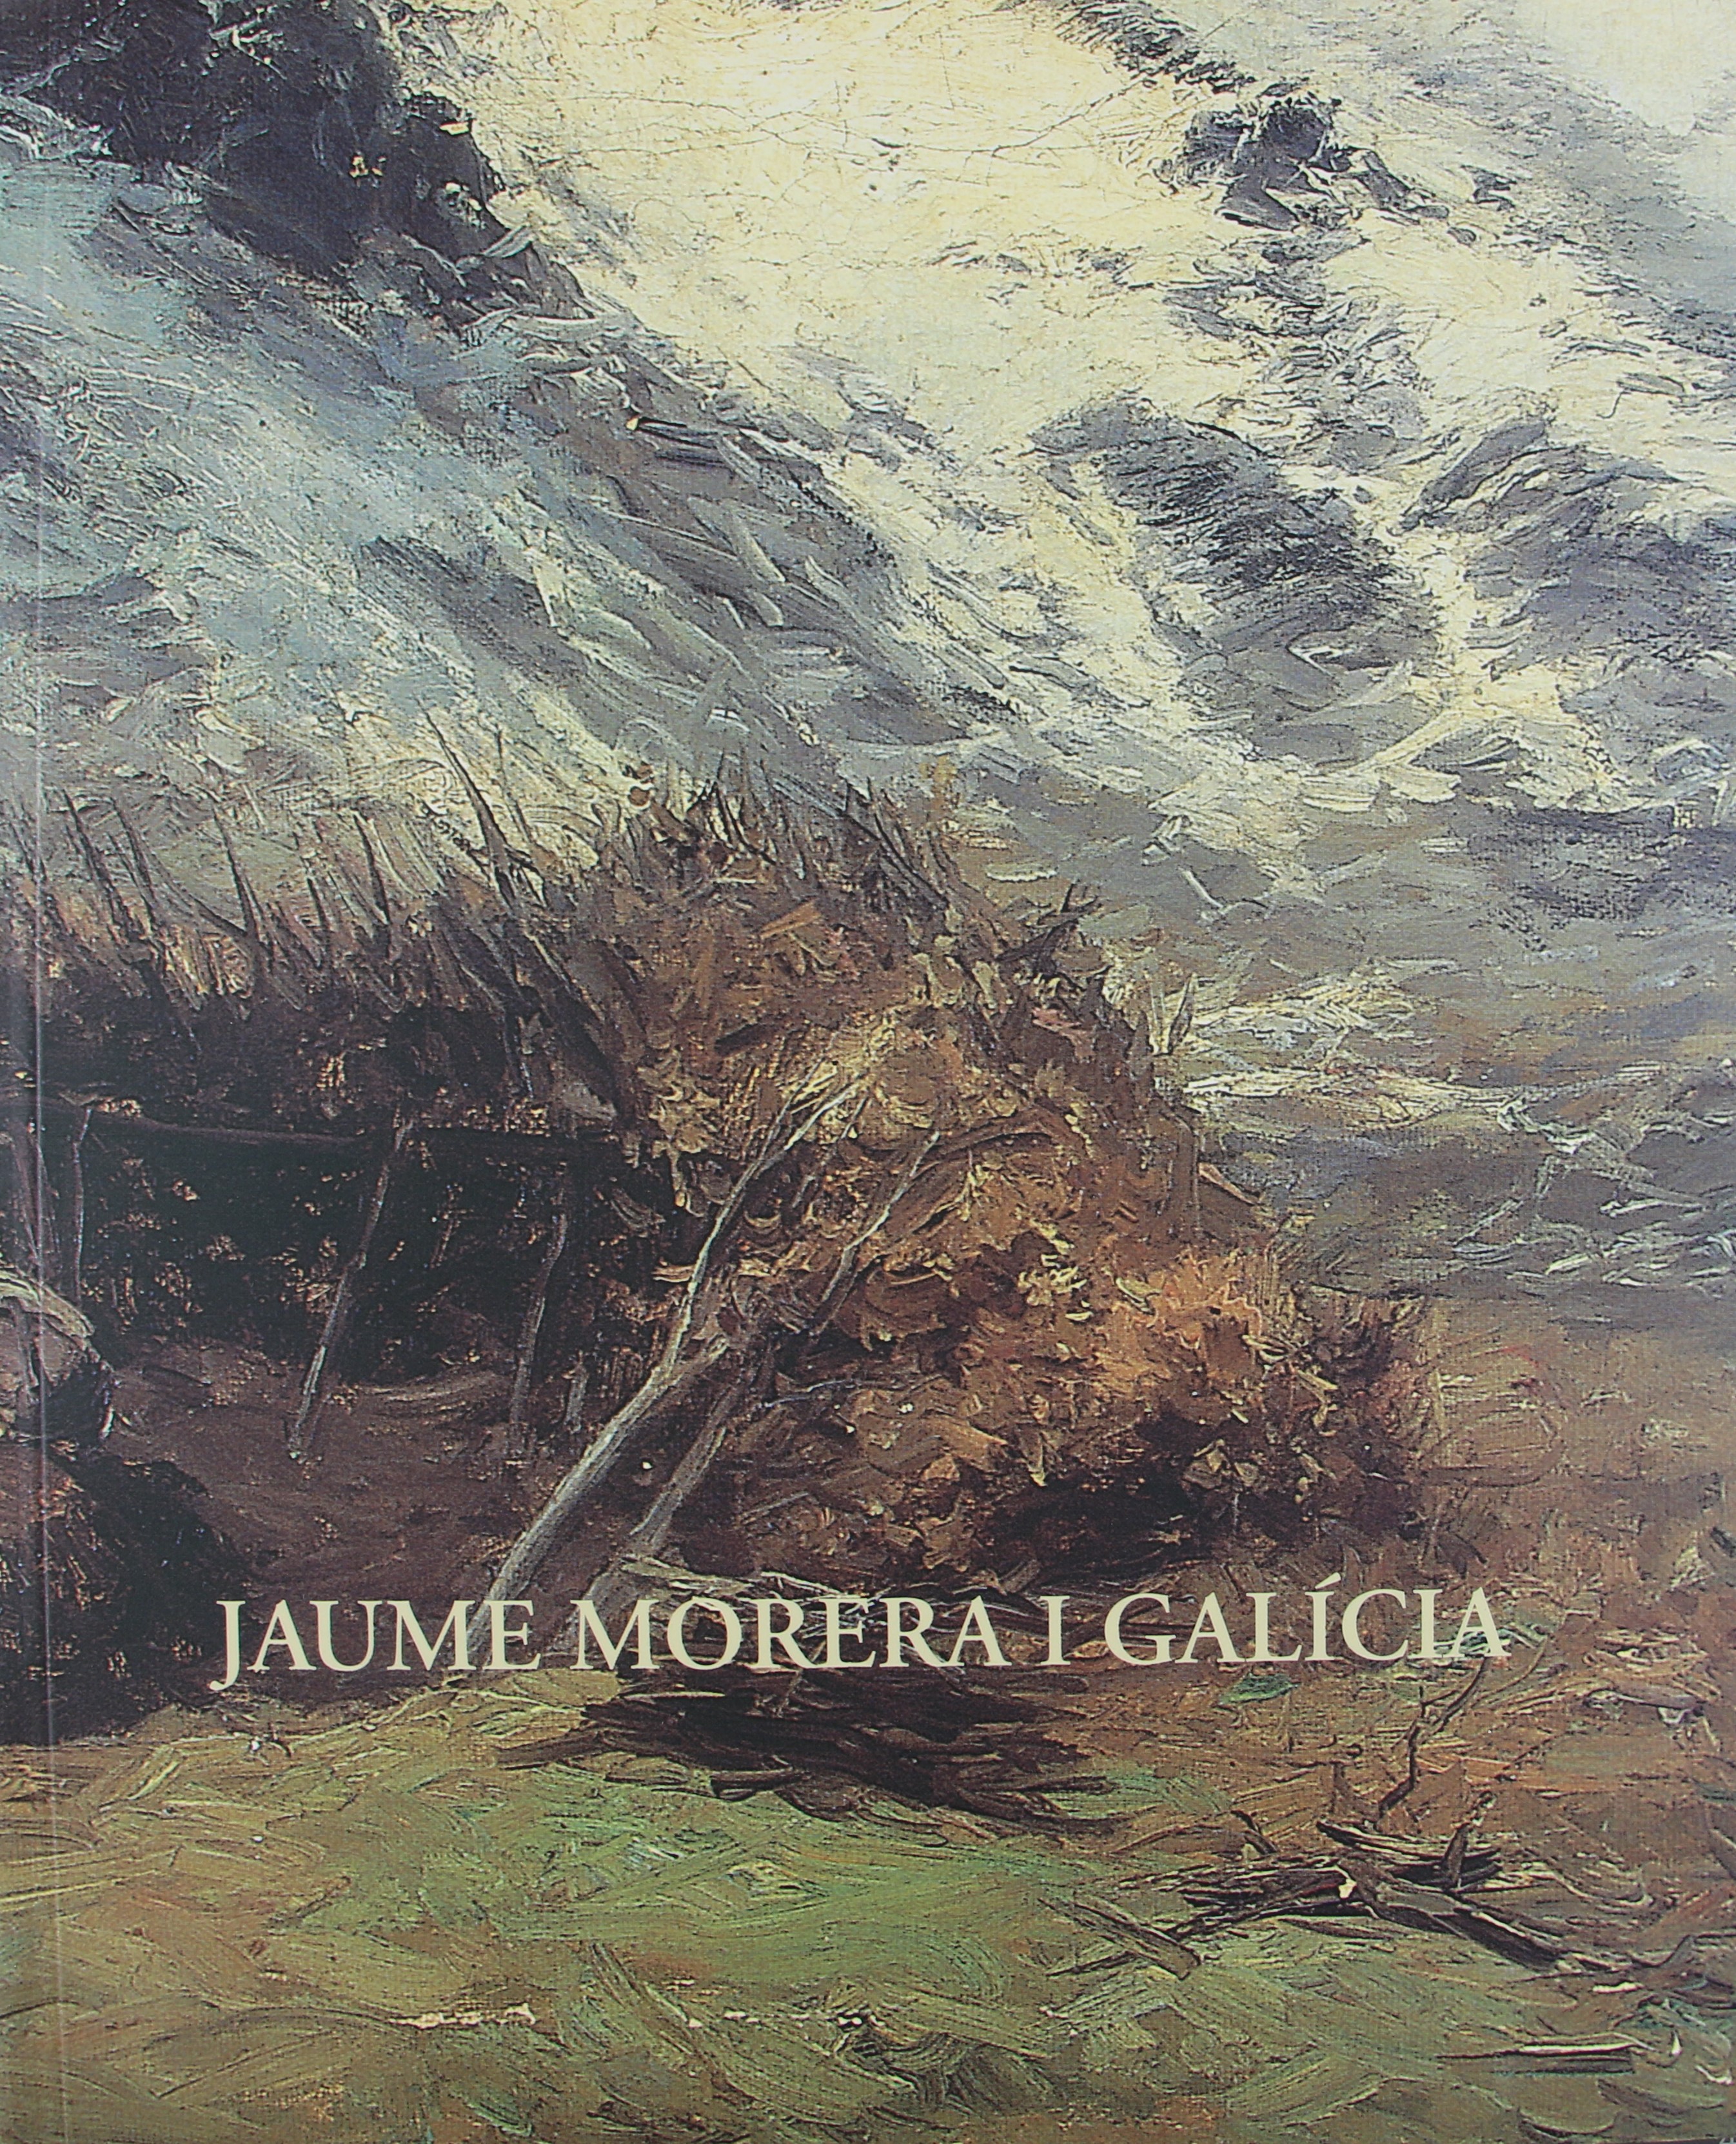 Jaime Morera i Galicia (1854-1927